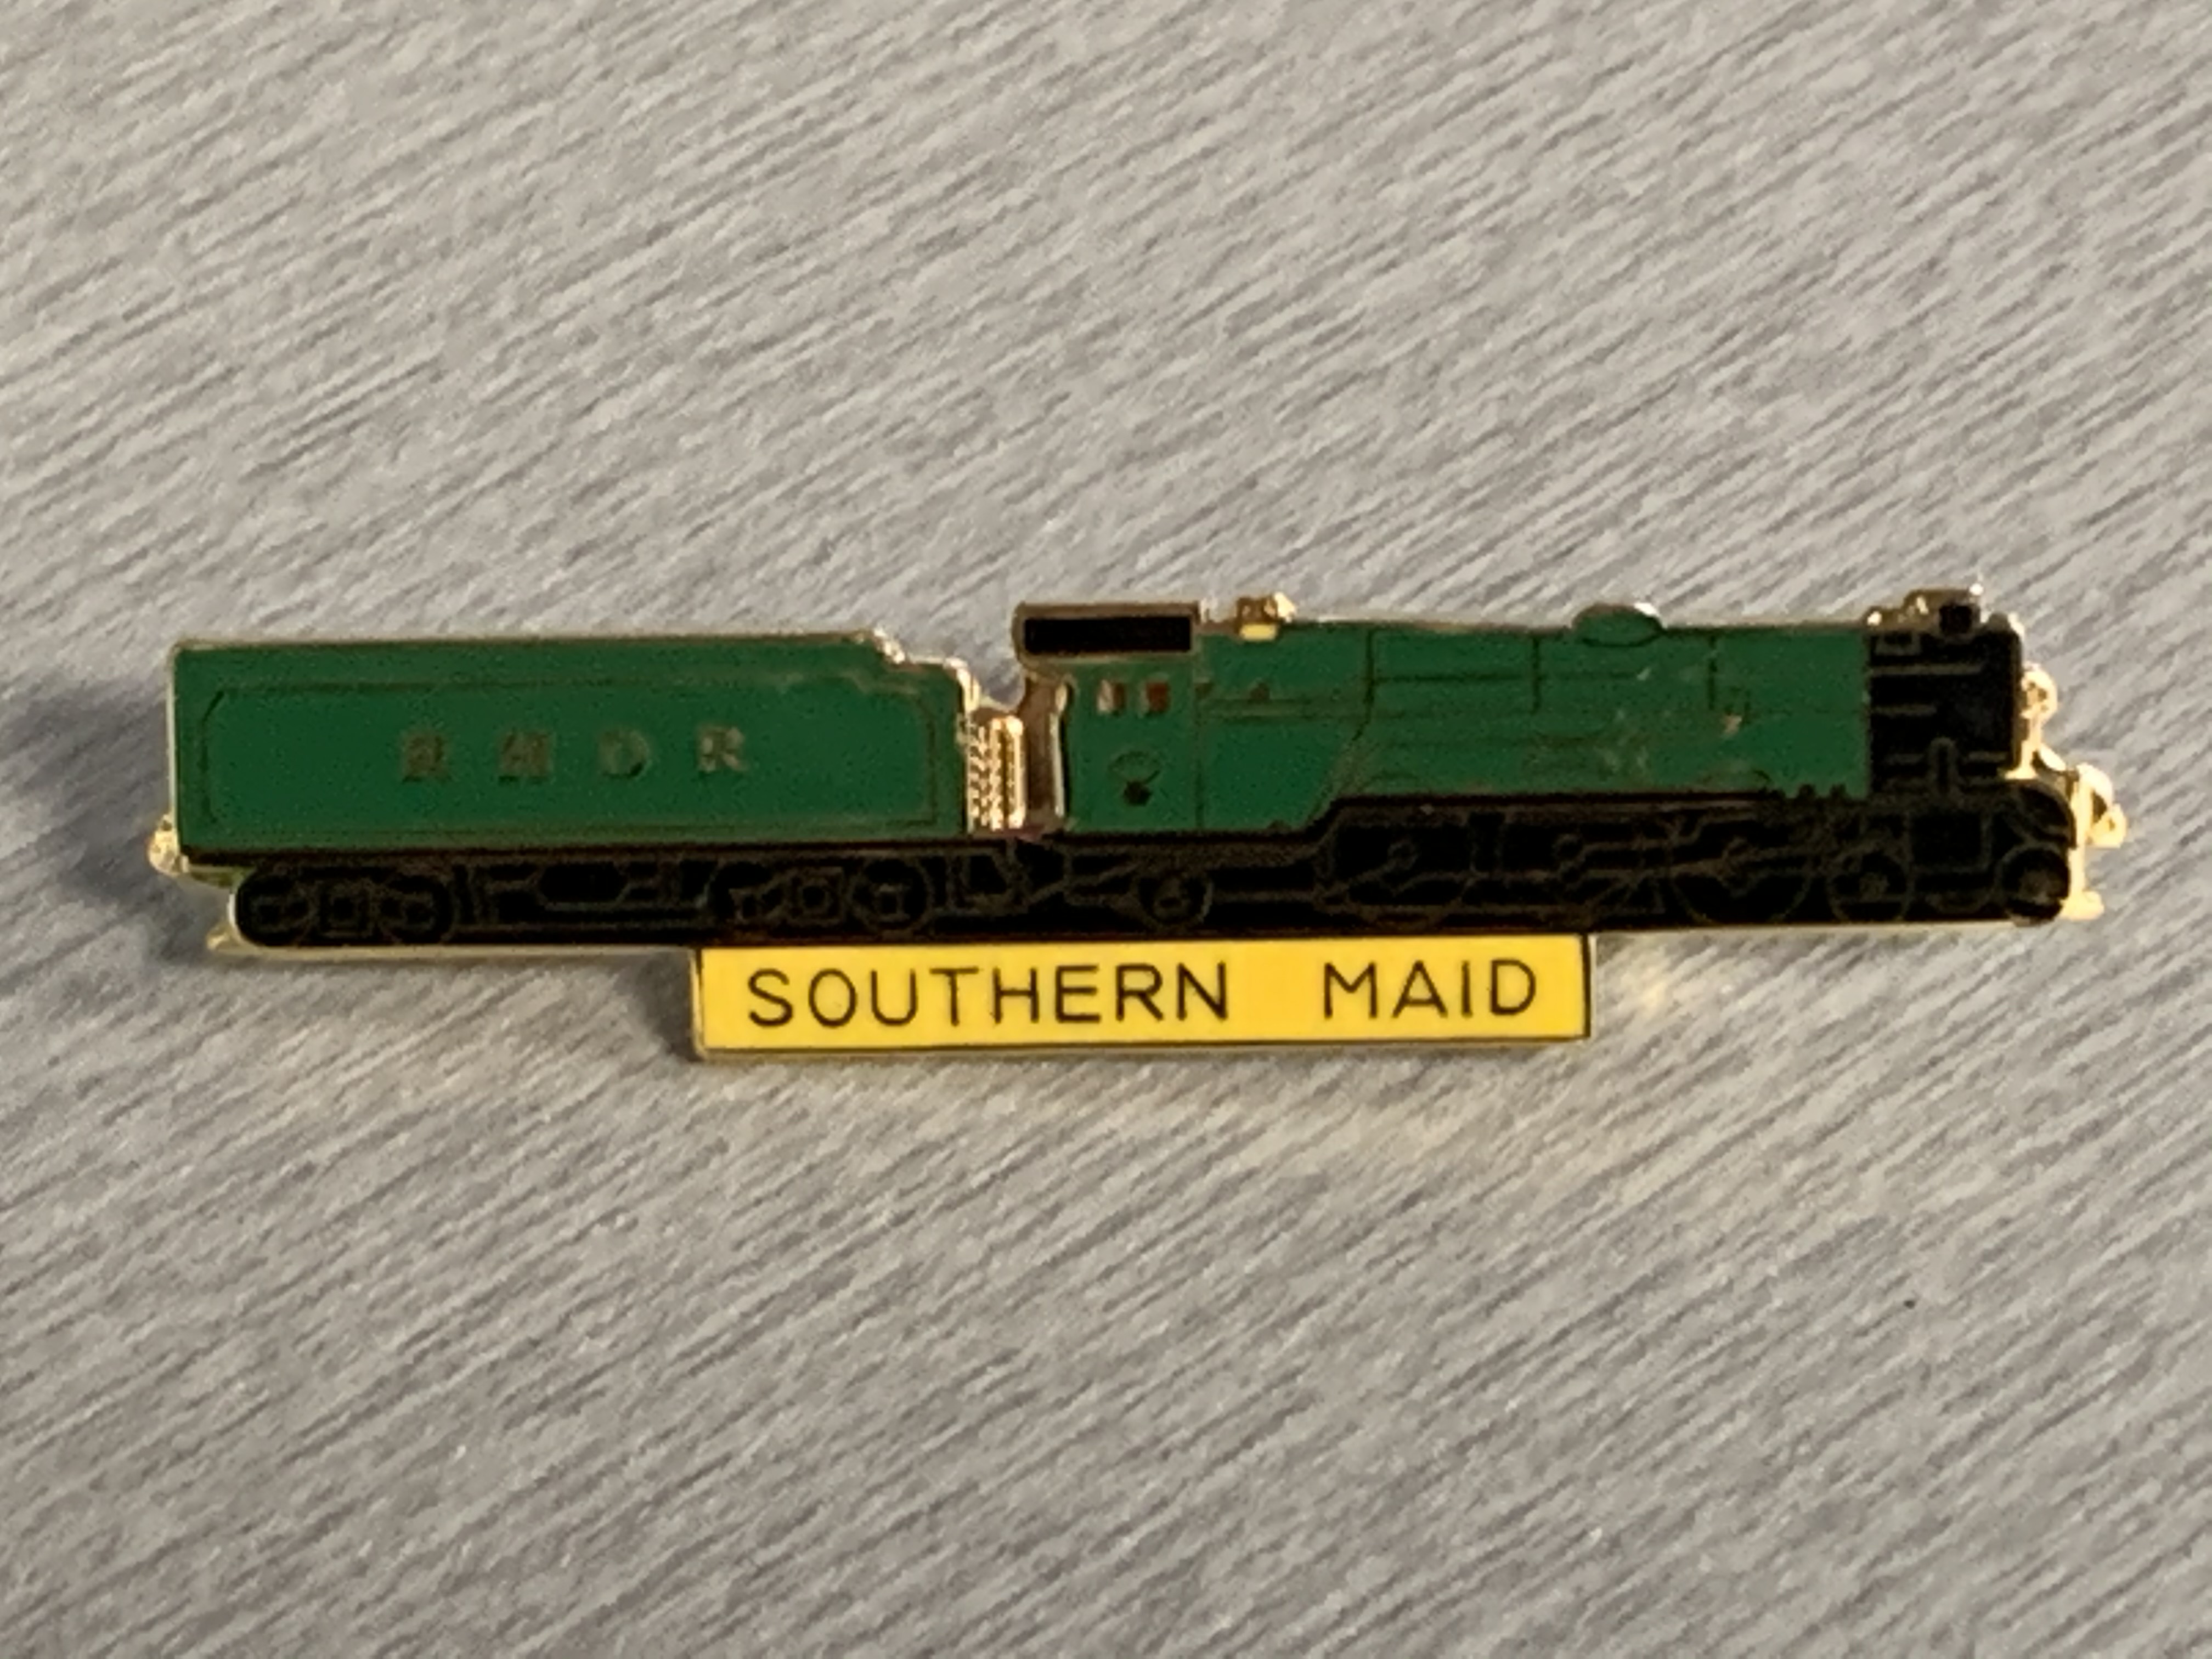 Southern Maid Locomotive Badge